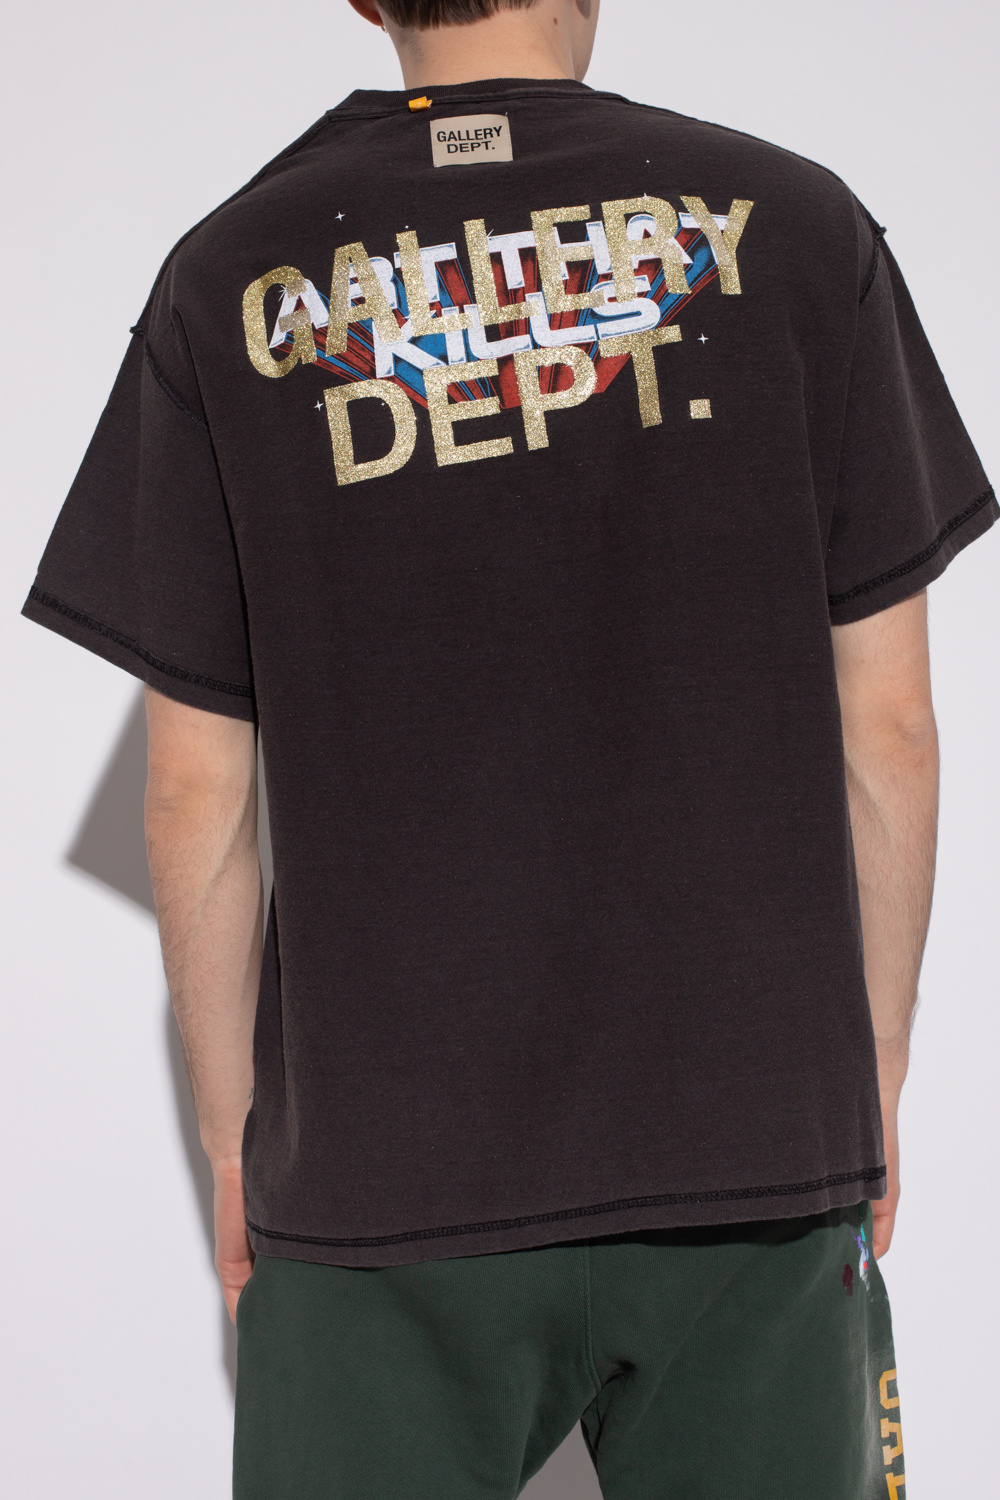 GALLERY DEPT. Printed T-shirt | Men's Clothing | IetpShops